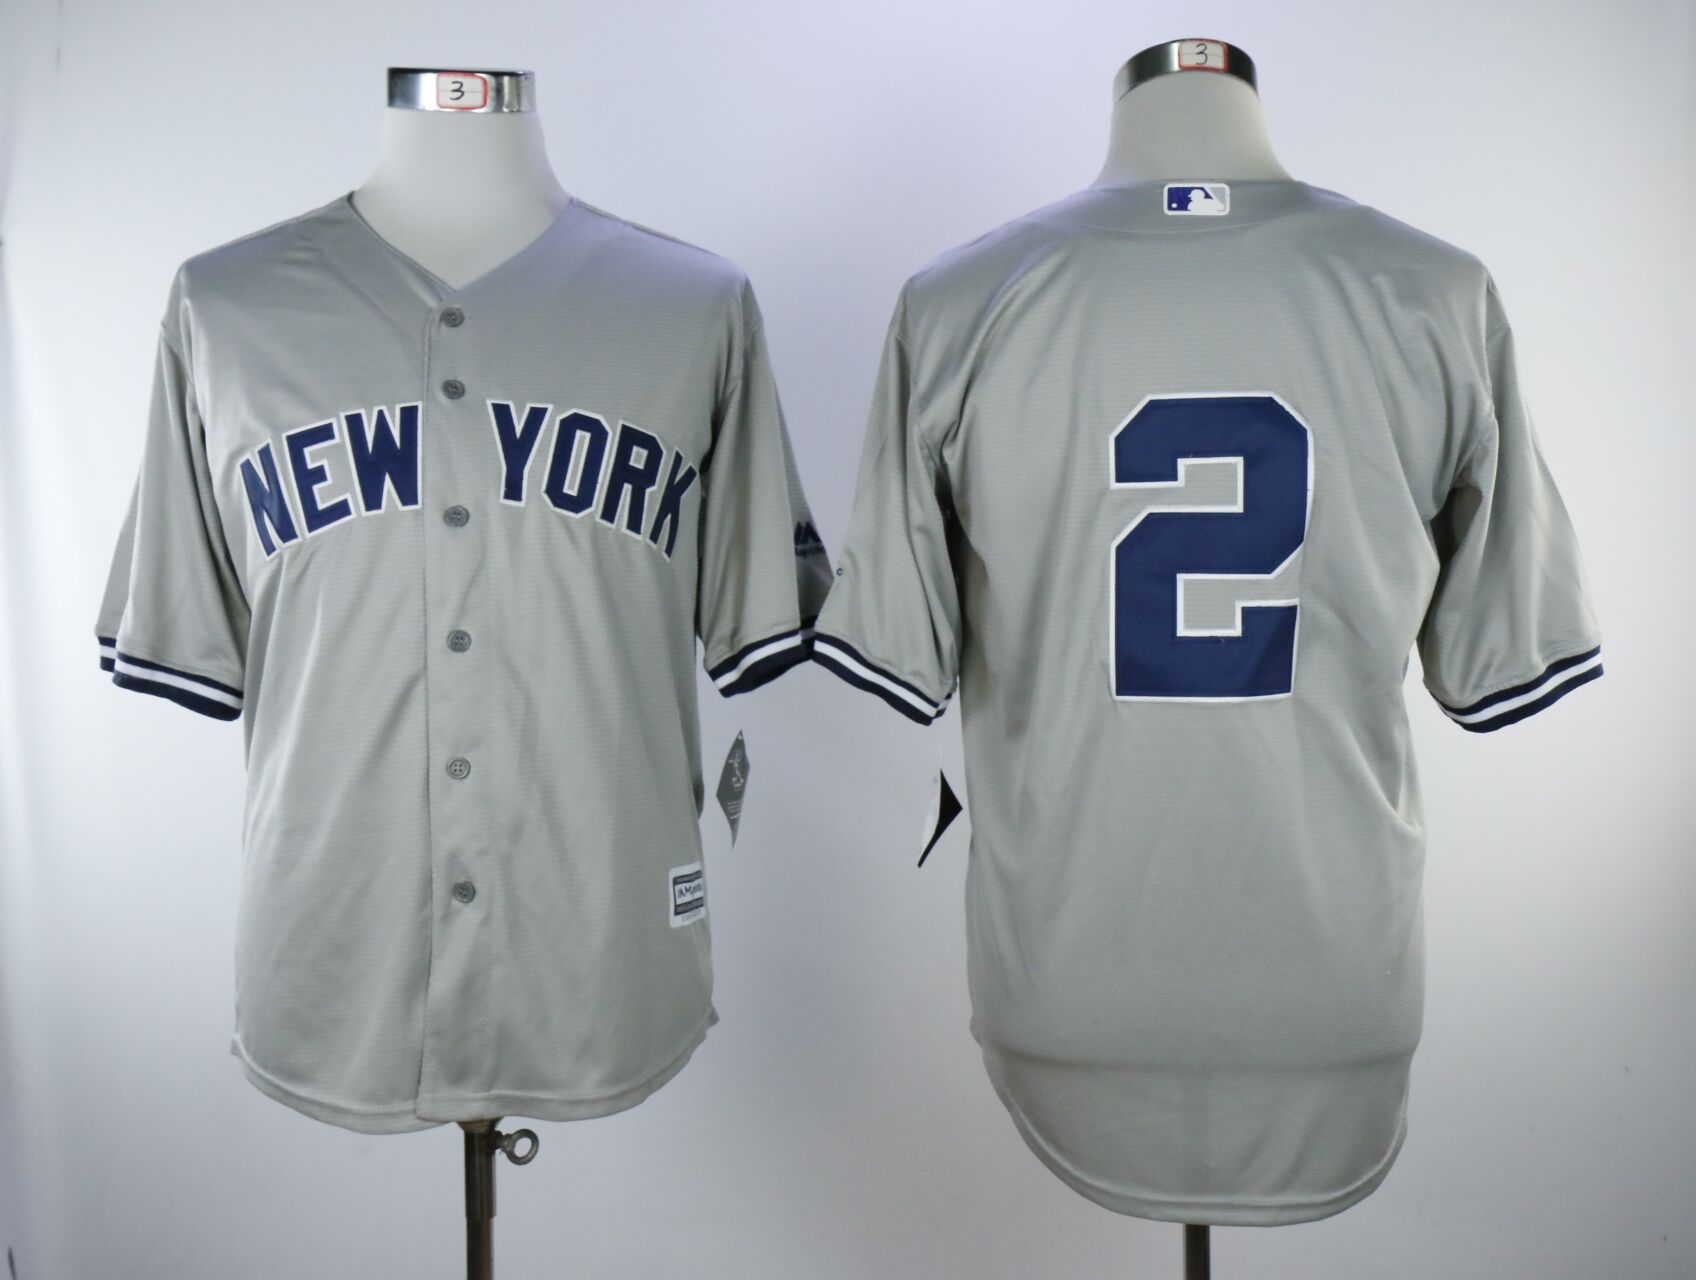 New York Yankees #2 Derek Jeter Gray Cool Base Jersey